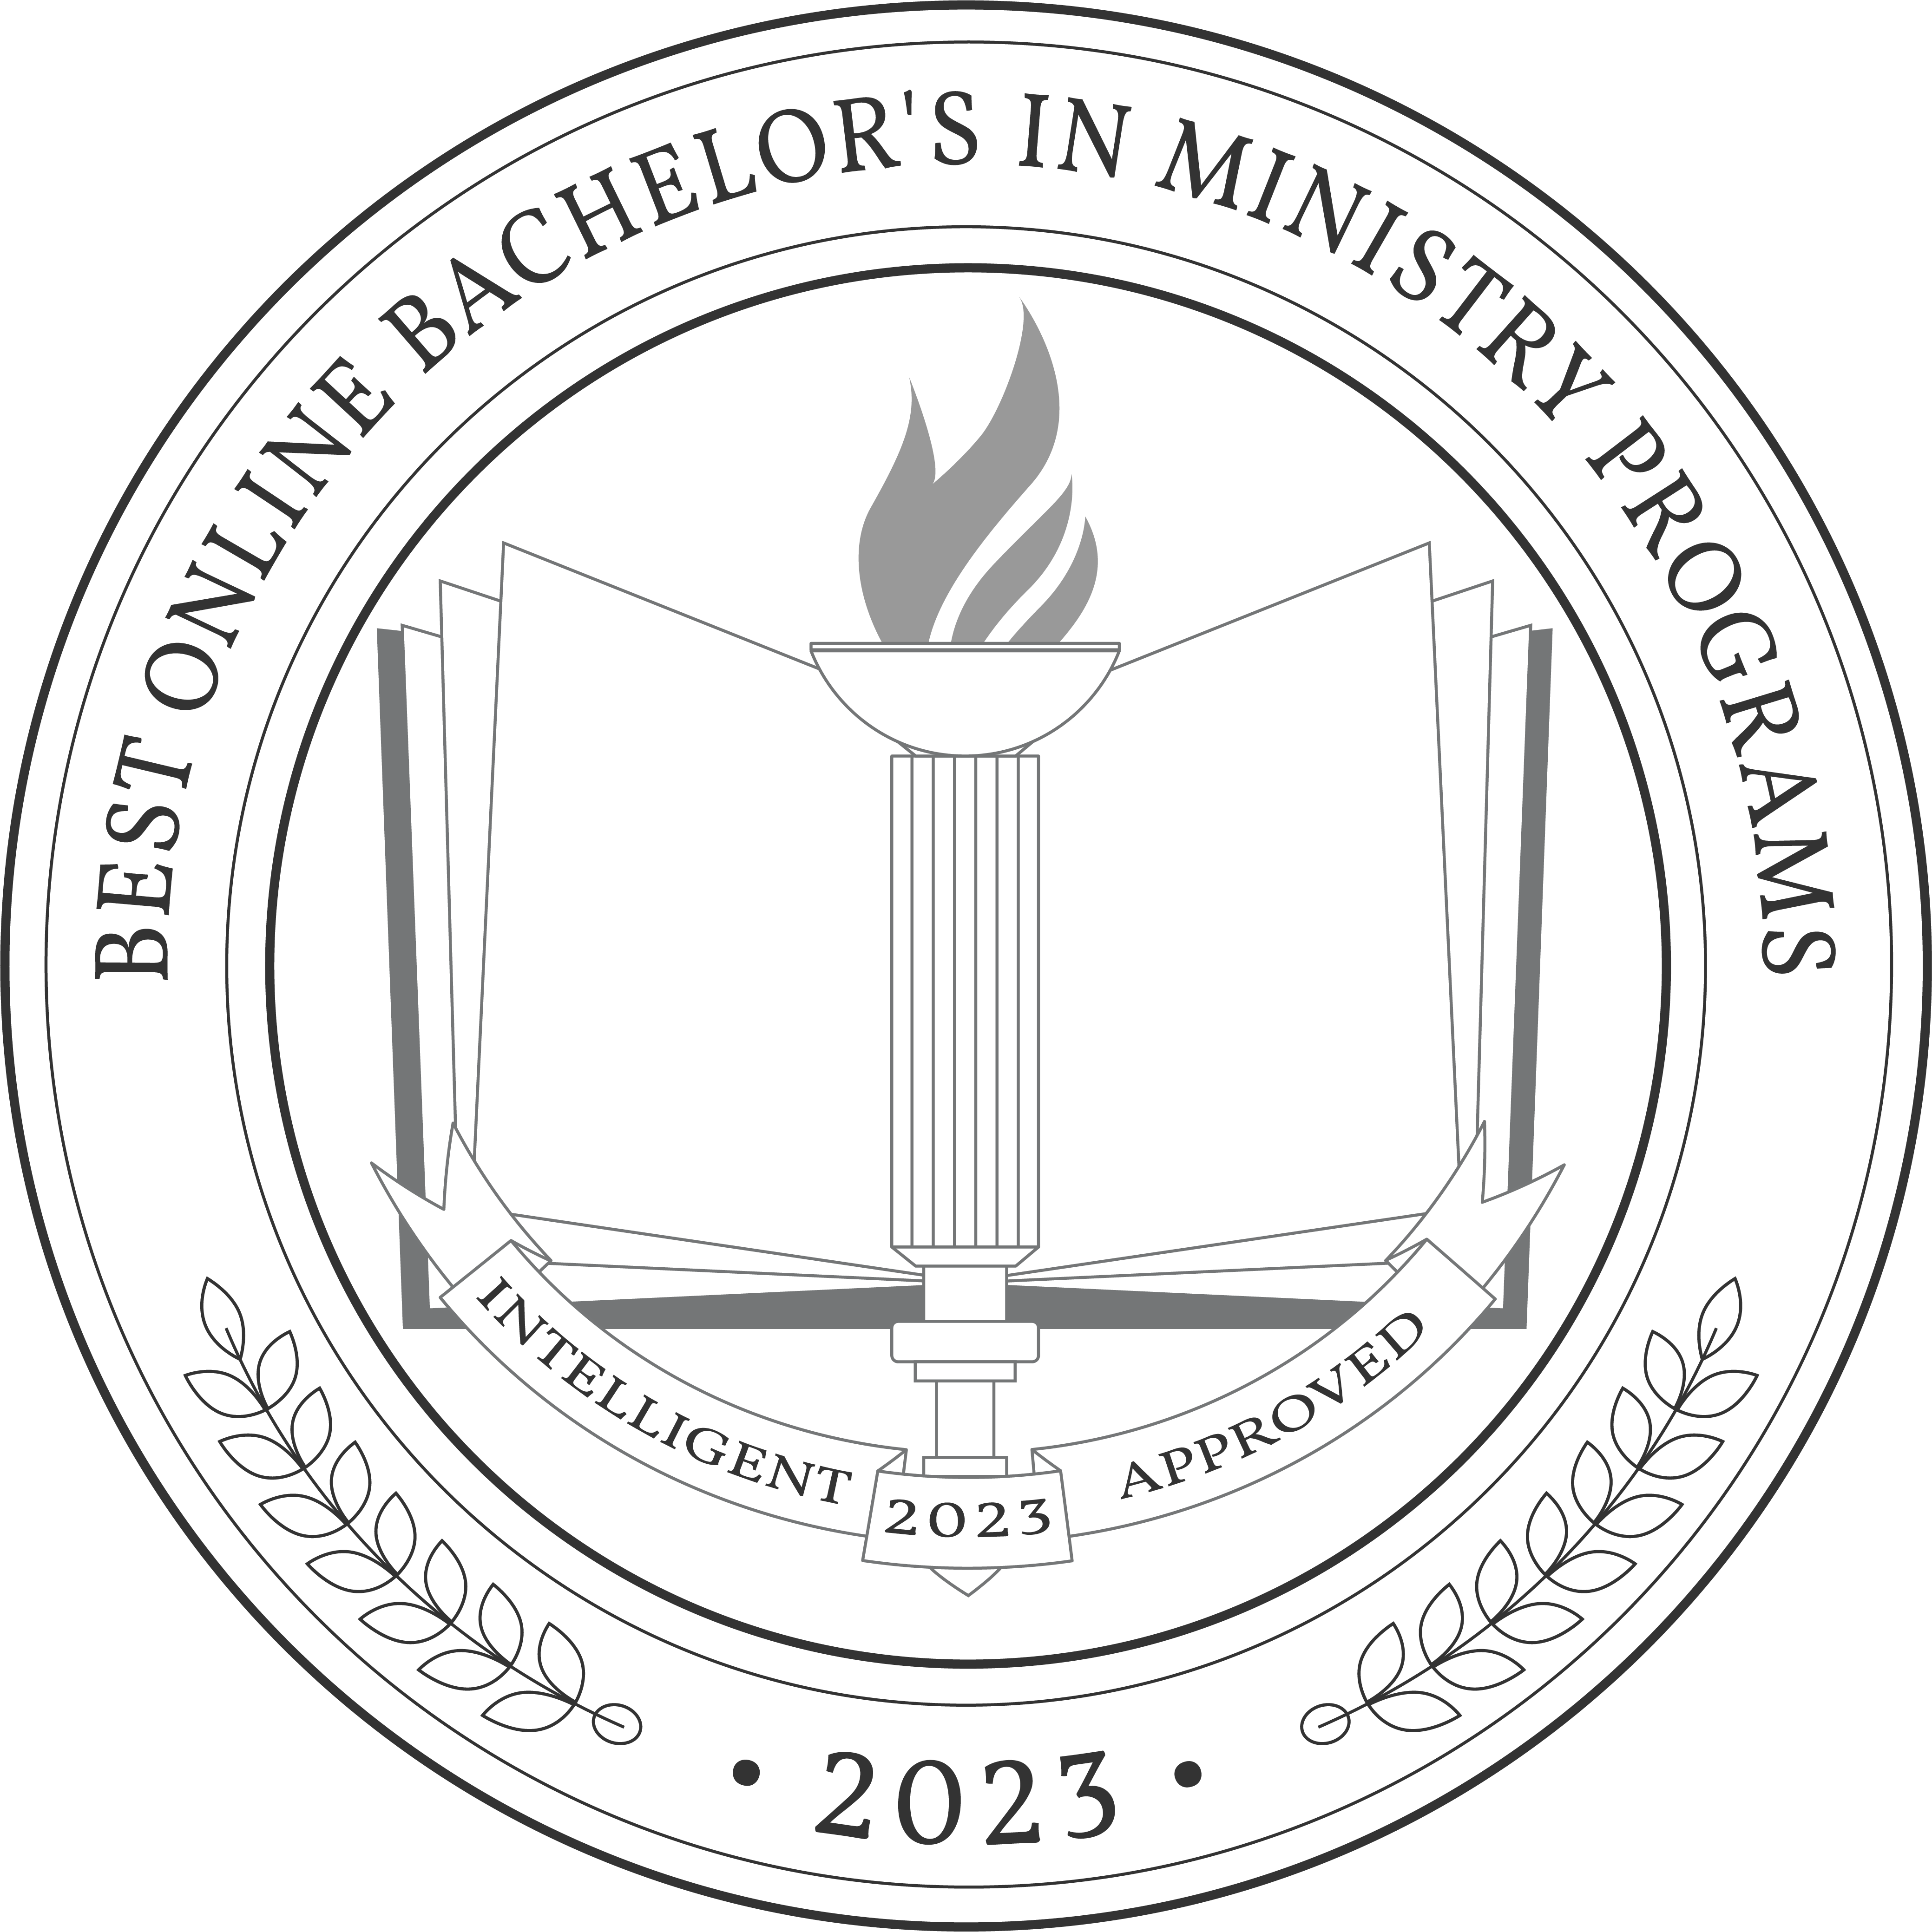 Best Online Bachelor's in Ministry Programs badge